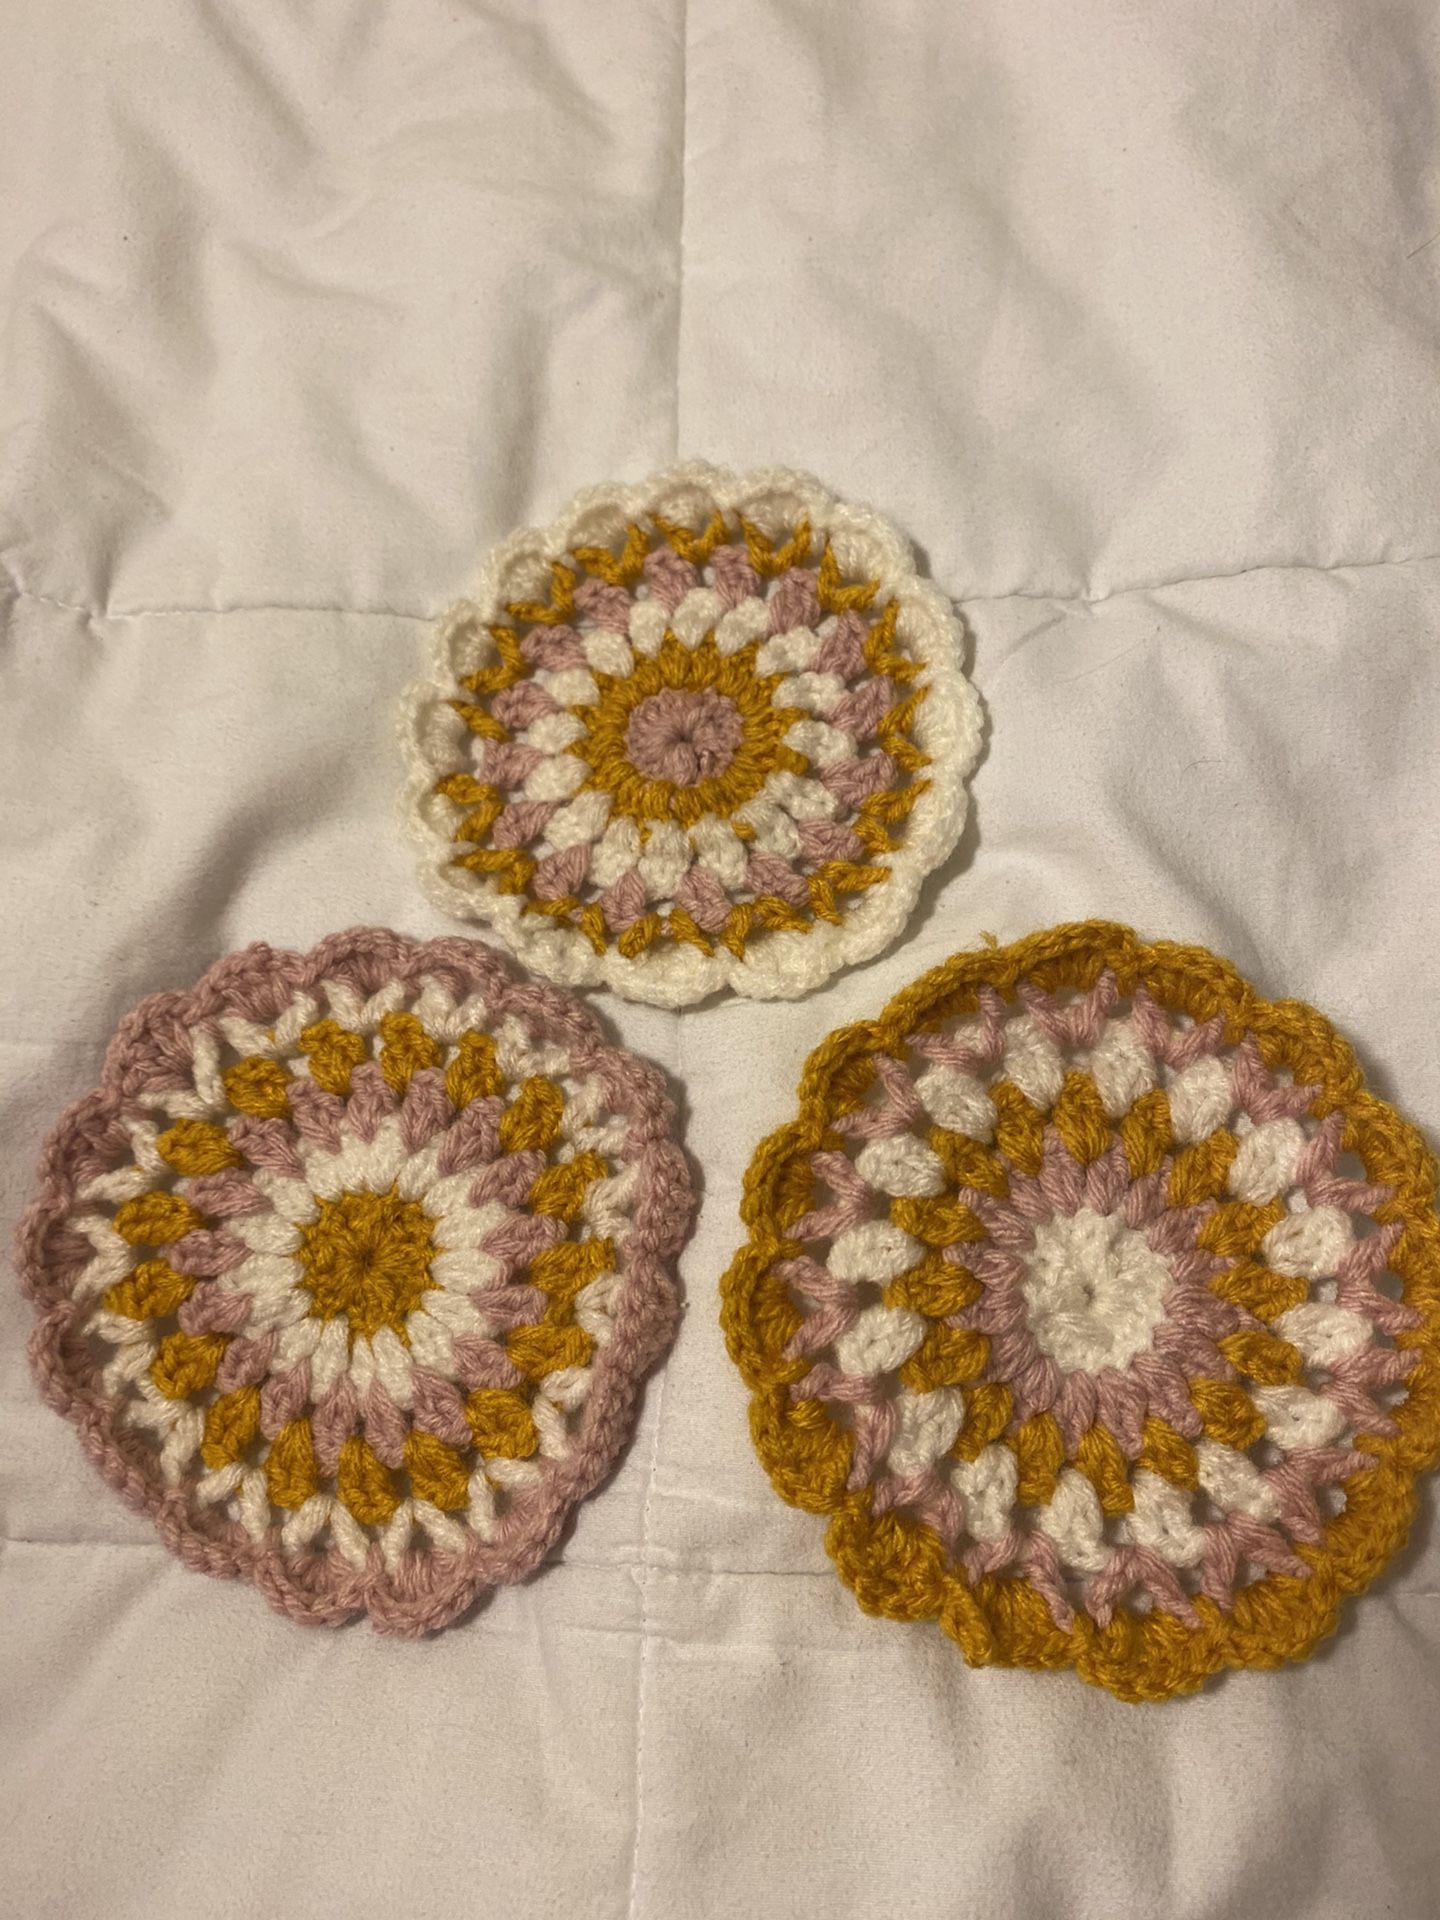 Customizable crochet coasters